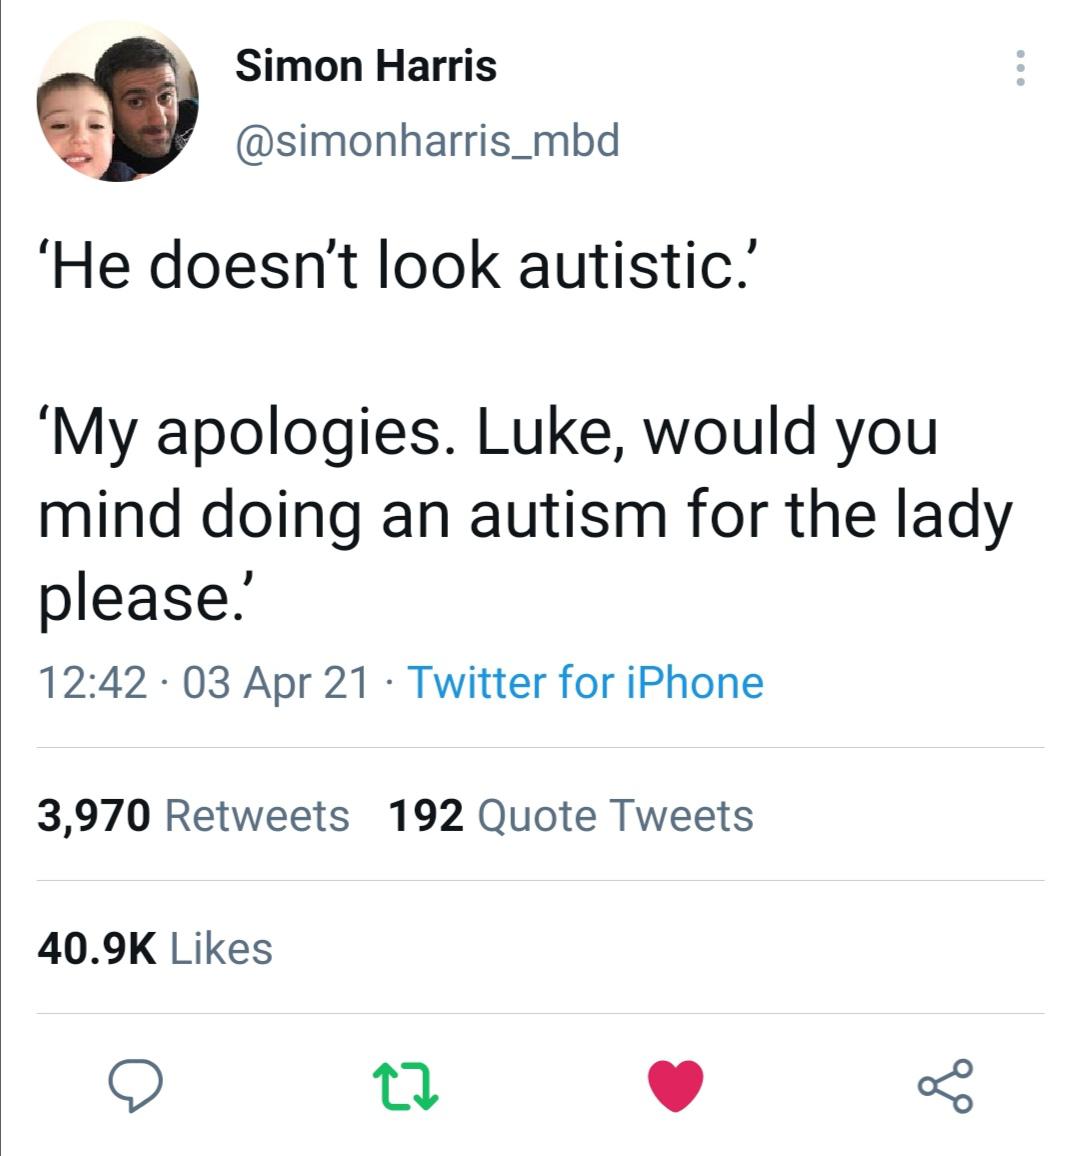 Go on then, Luke...